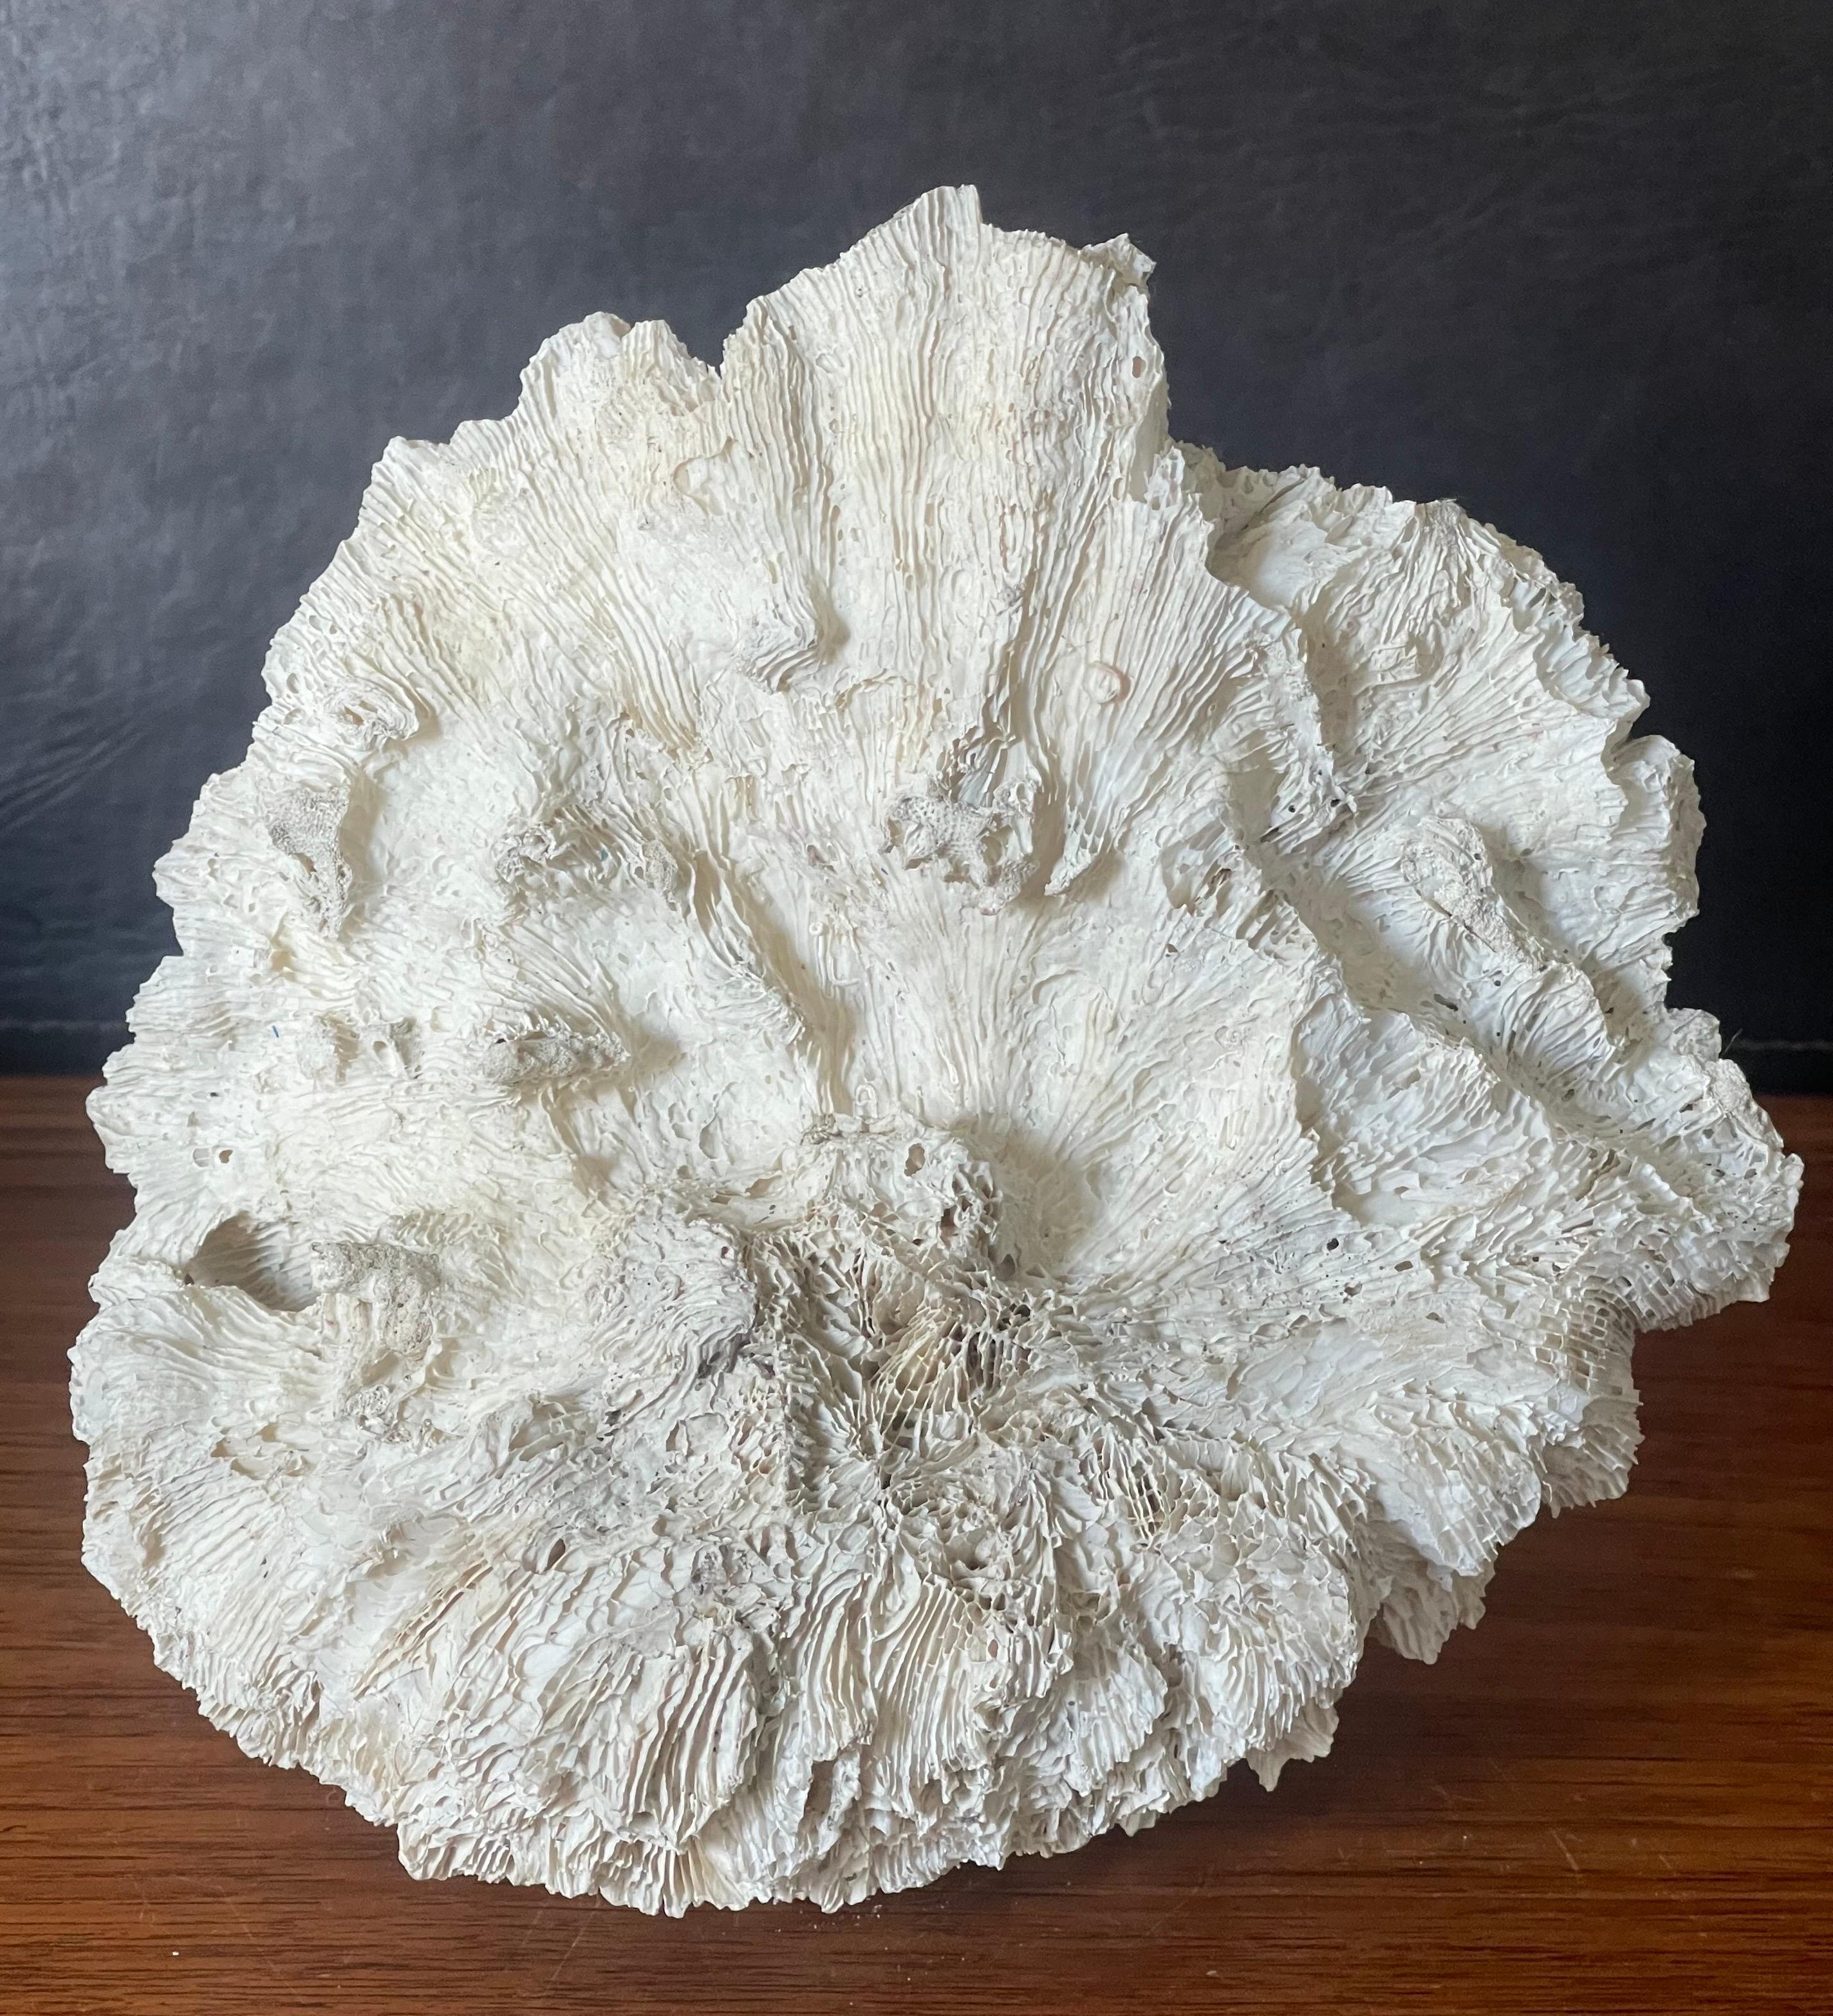 Large Natural White Sea Coral Specimen 3